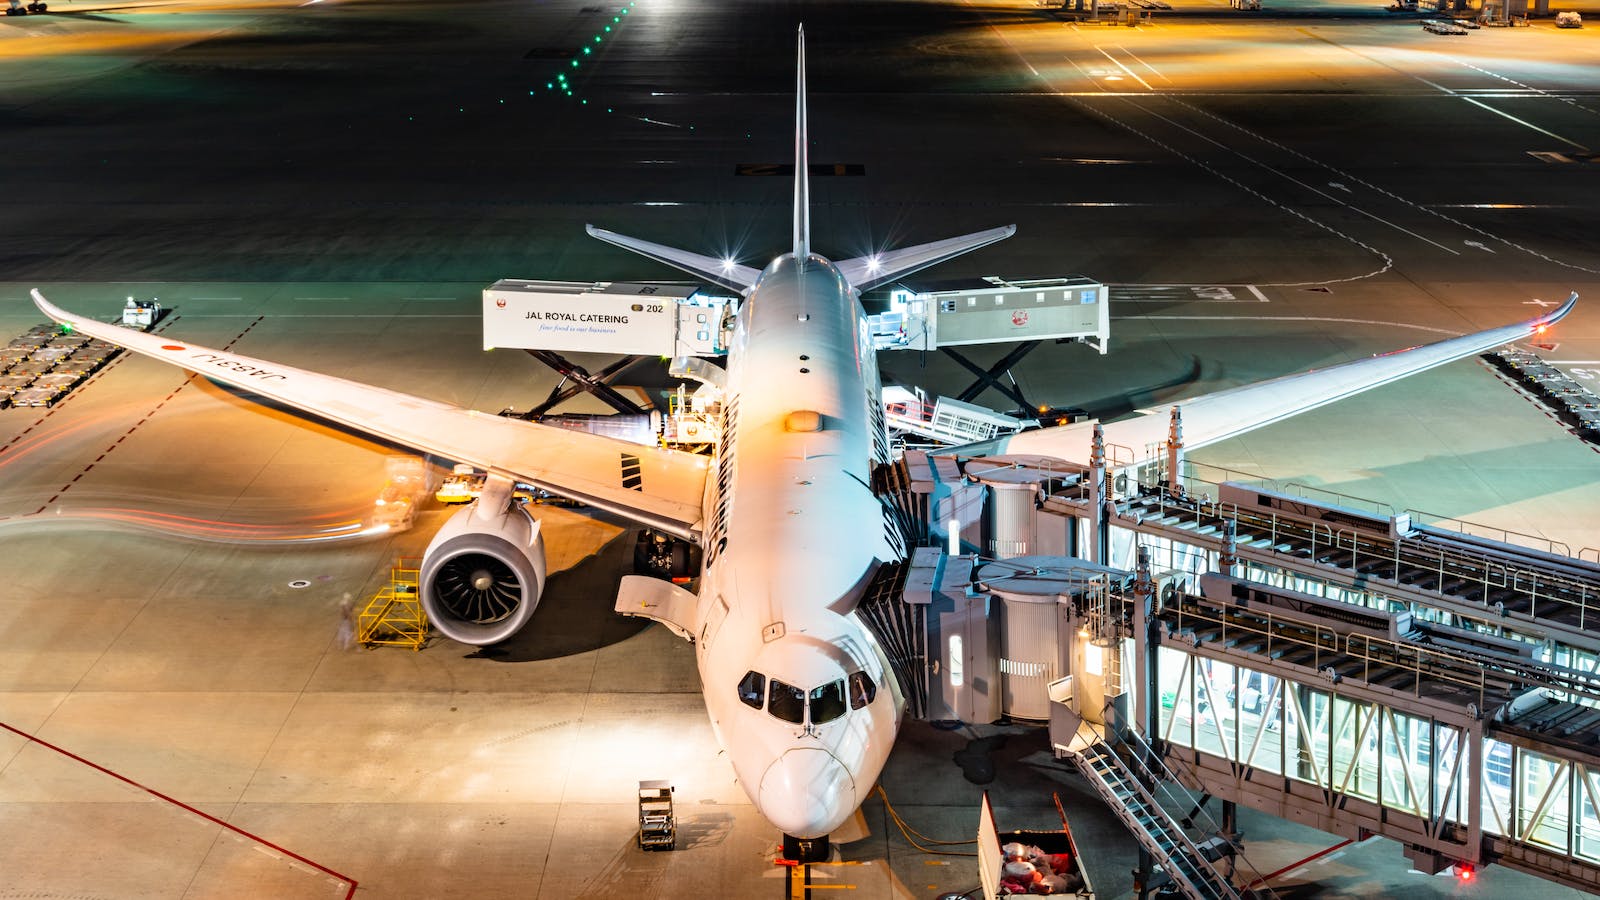 Airport Cleaner Jobs In Australia With Visa Sponsorship